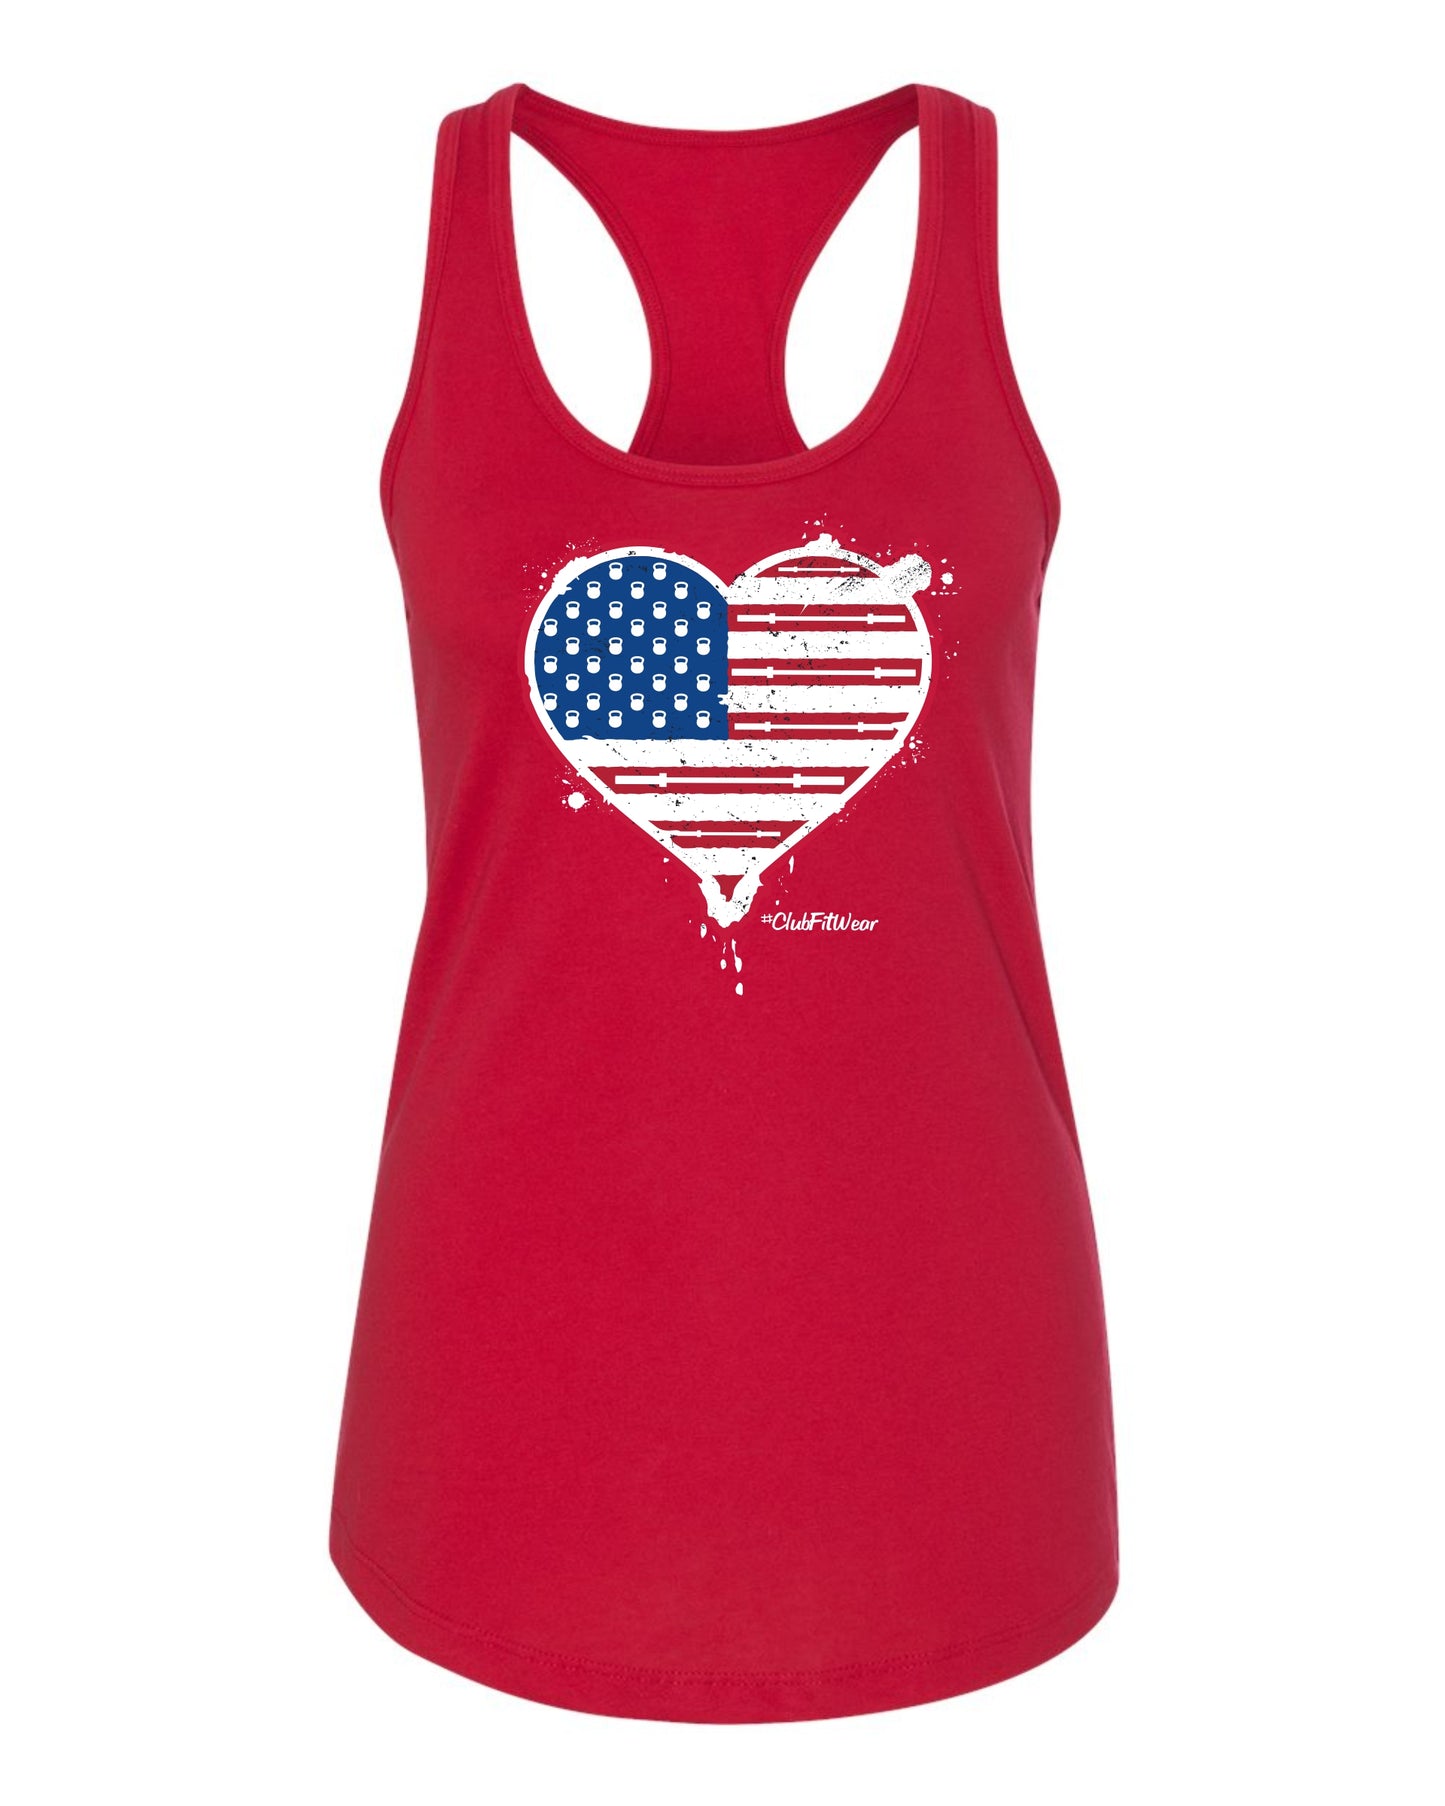 USA Loves Lifting - Heart Shaped Flag